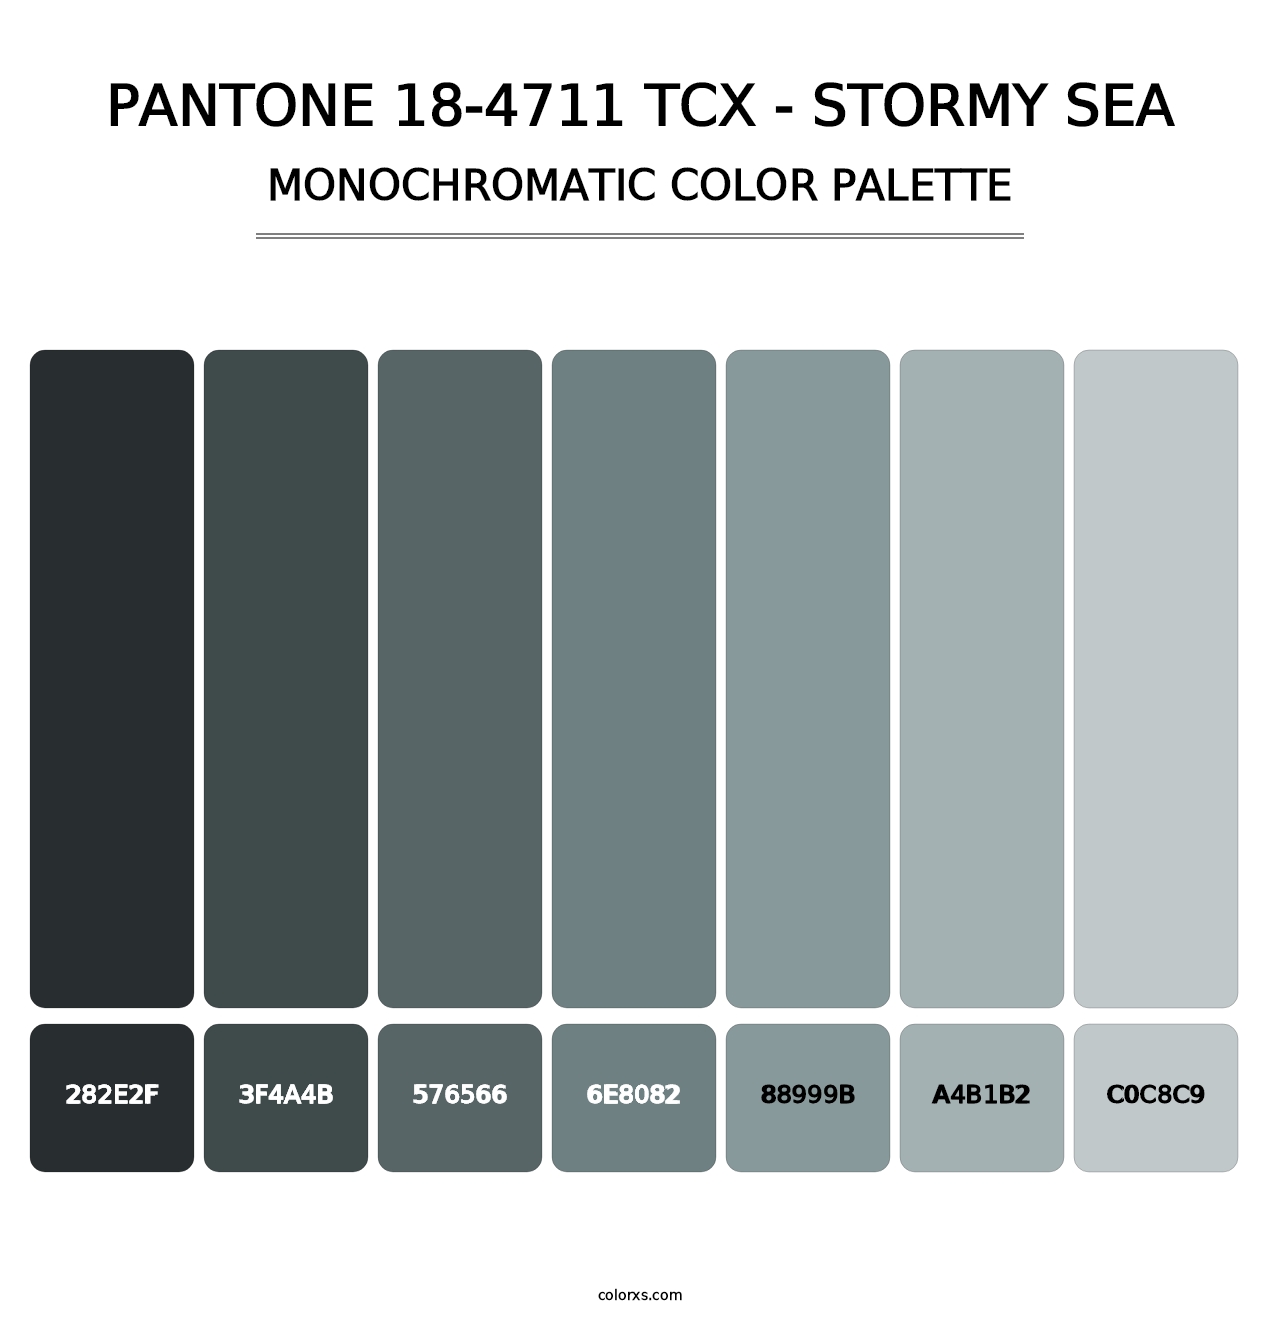 PANTONE 18-4711 TCX - Stormy Sea - Monochromatic Color Palette